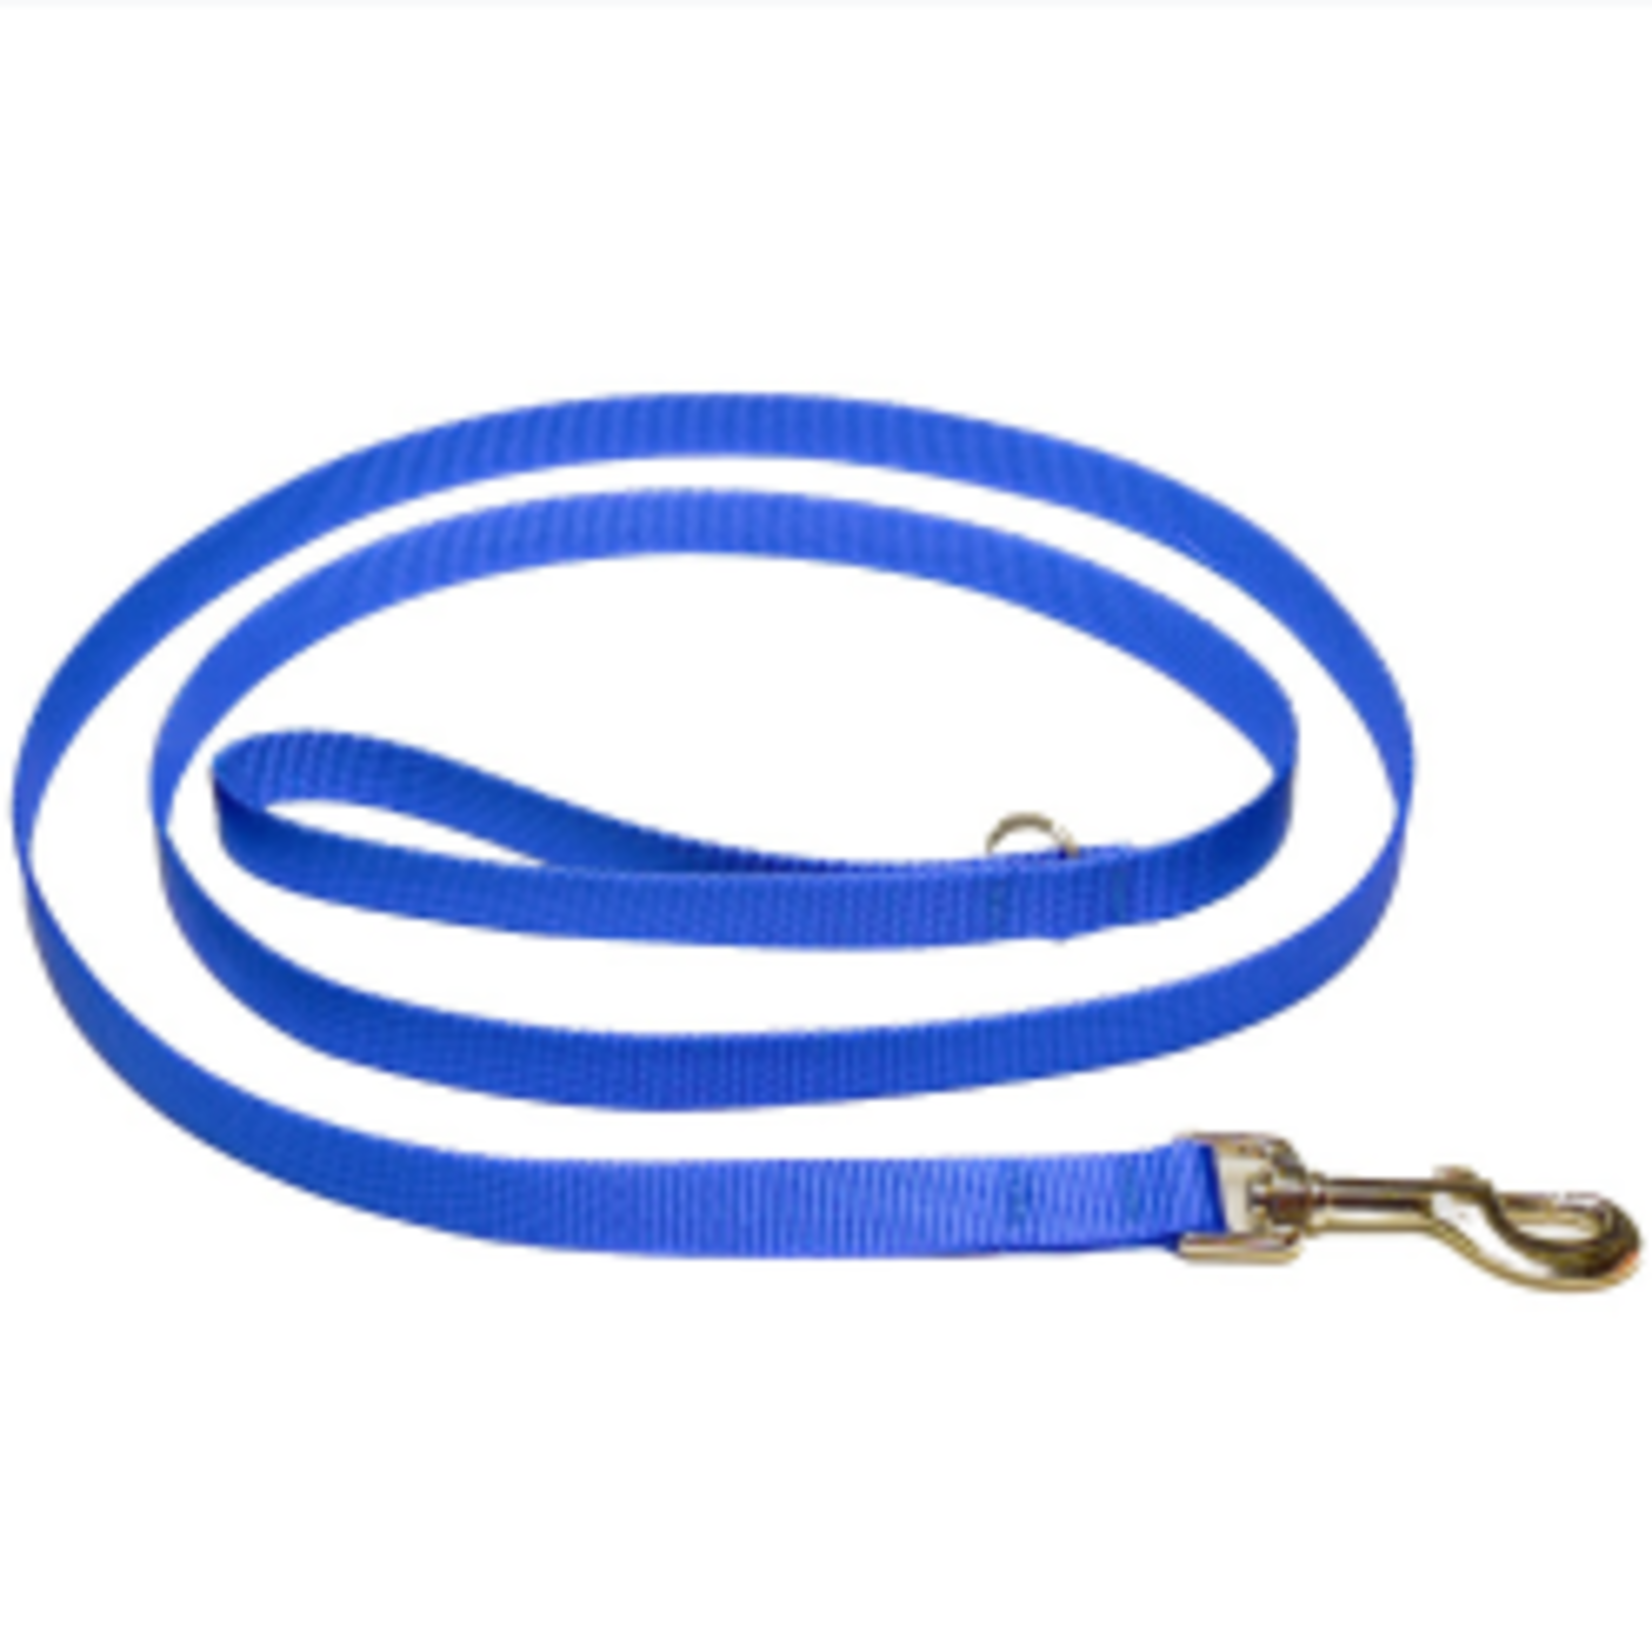 Hunter Brand Nylon leash - 1 in x 6 ft